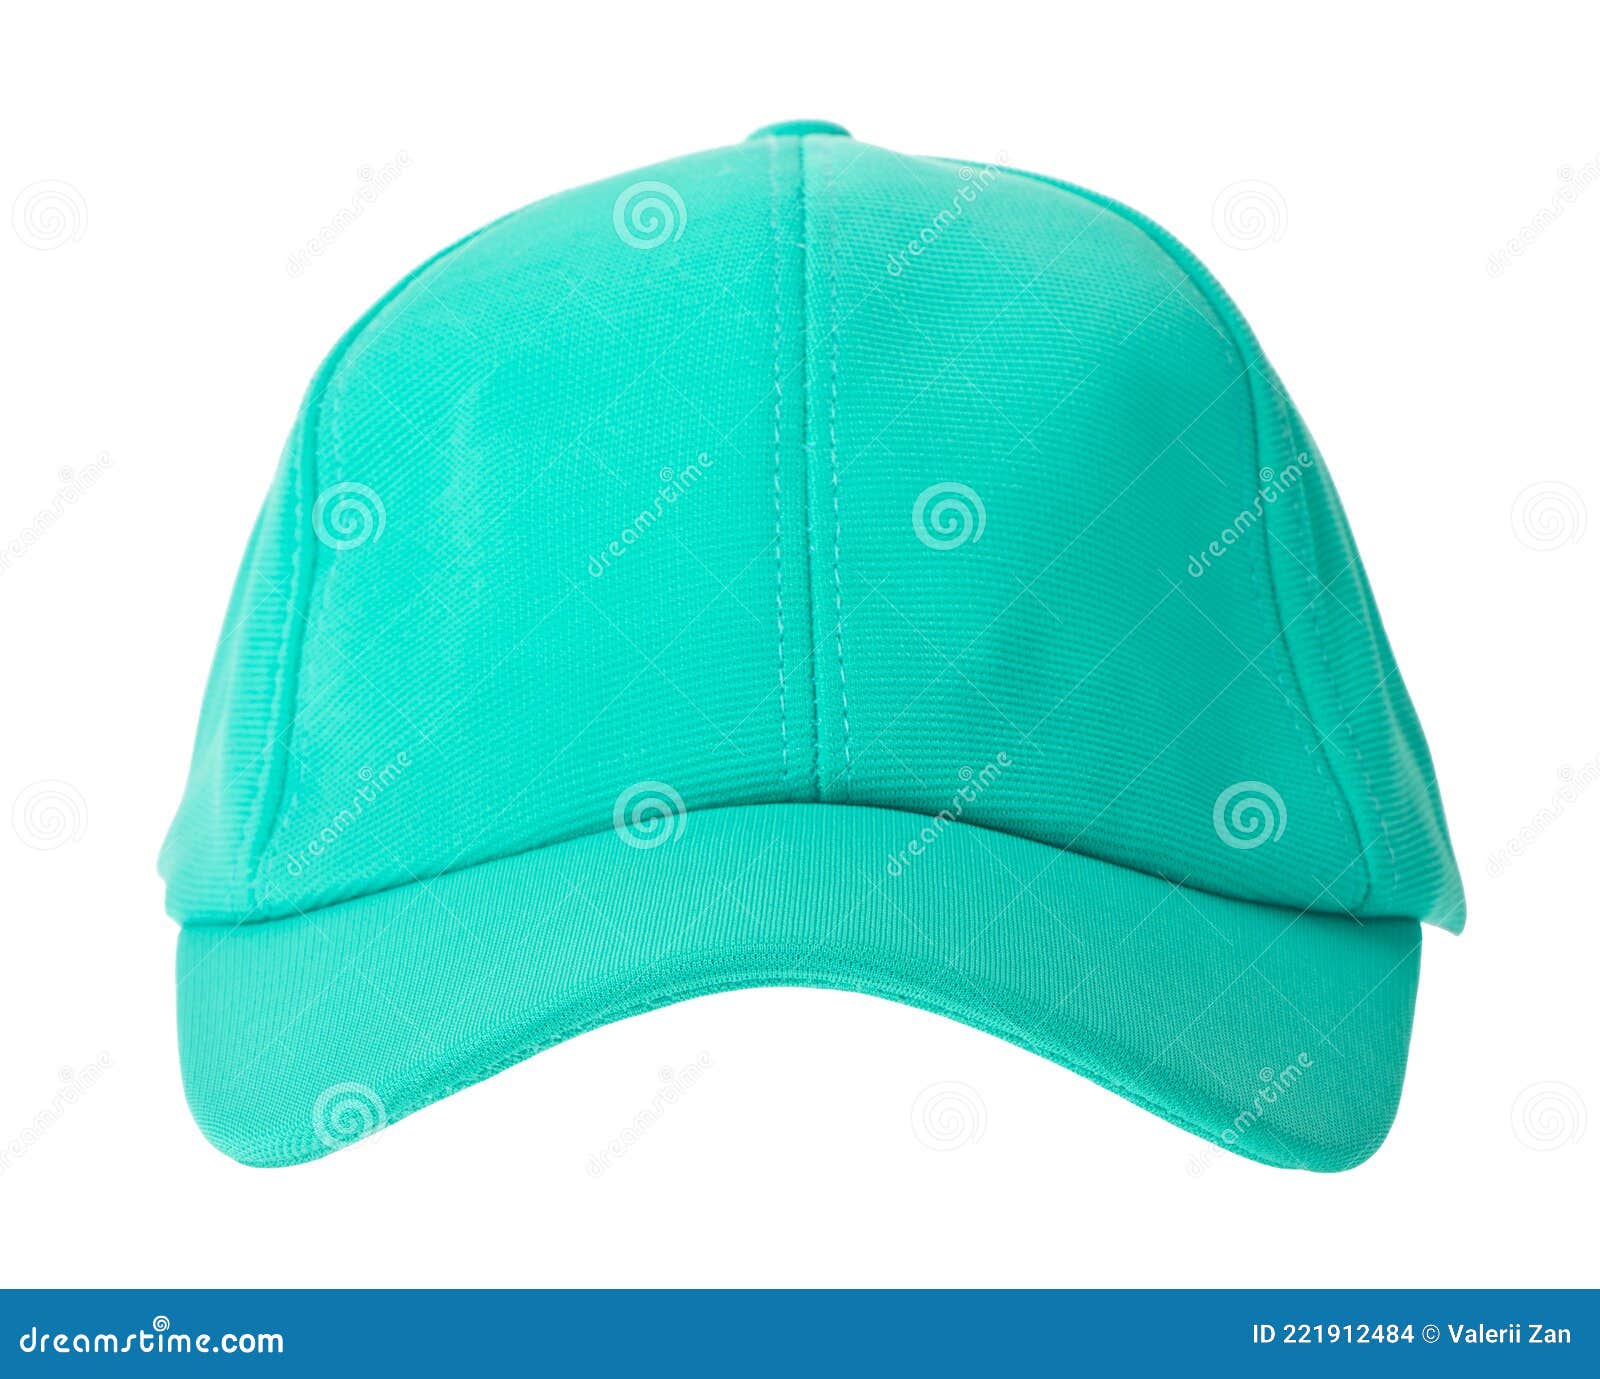 Green Cap, Baseball Cap Isolated on White Background Stock Photo ...